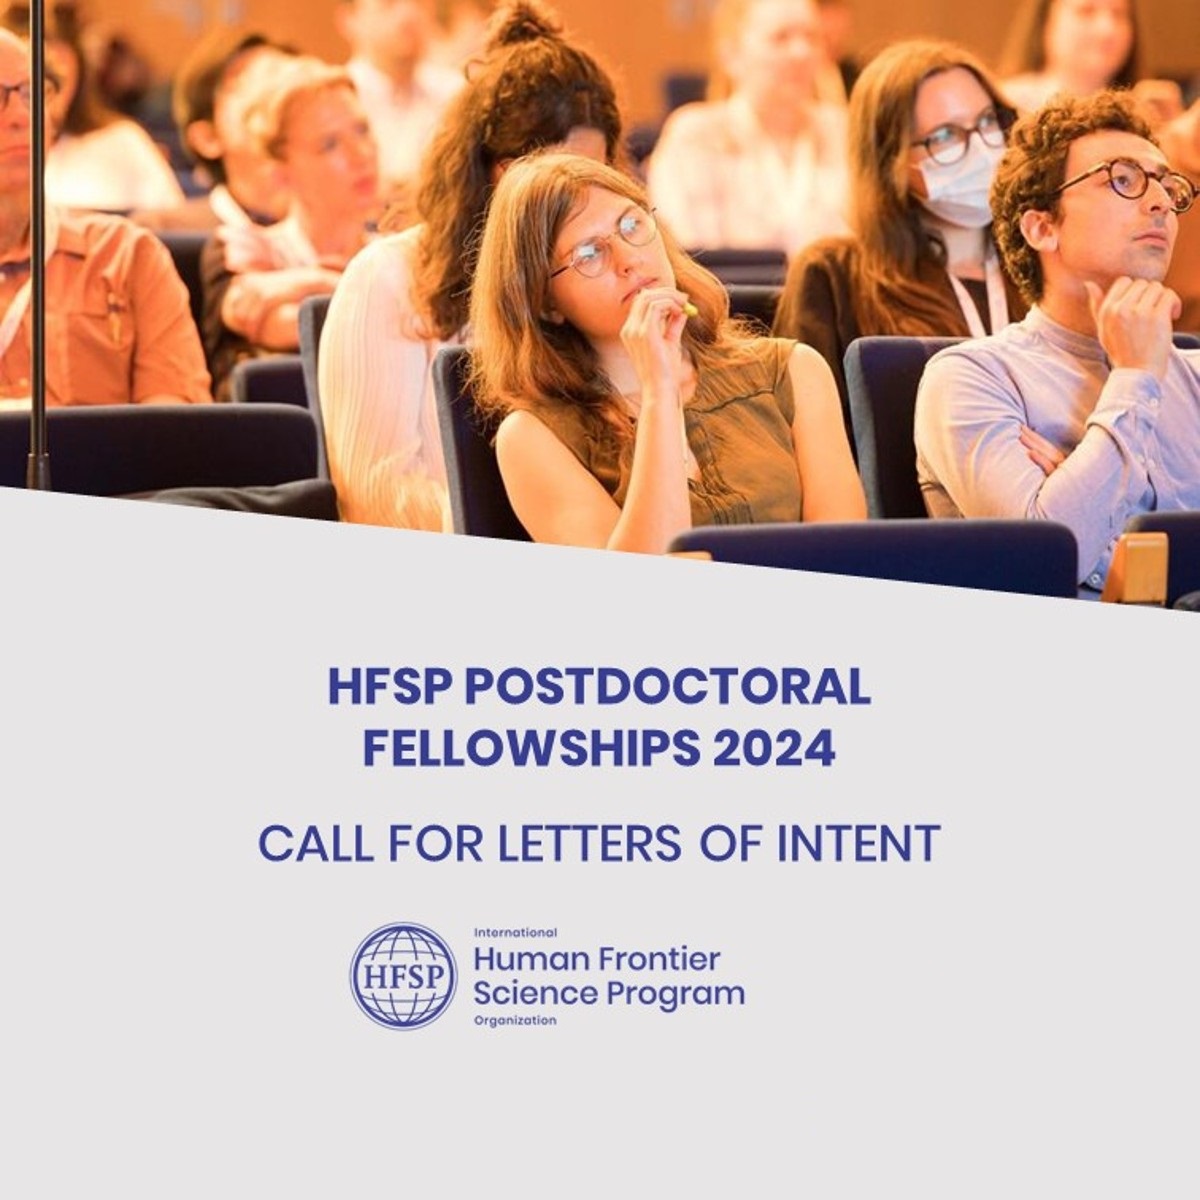 HFSP Postdoctoral Fellowships 2024